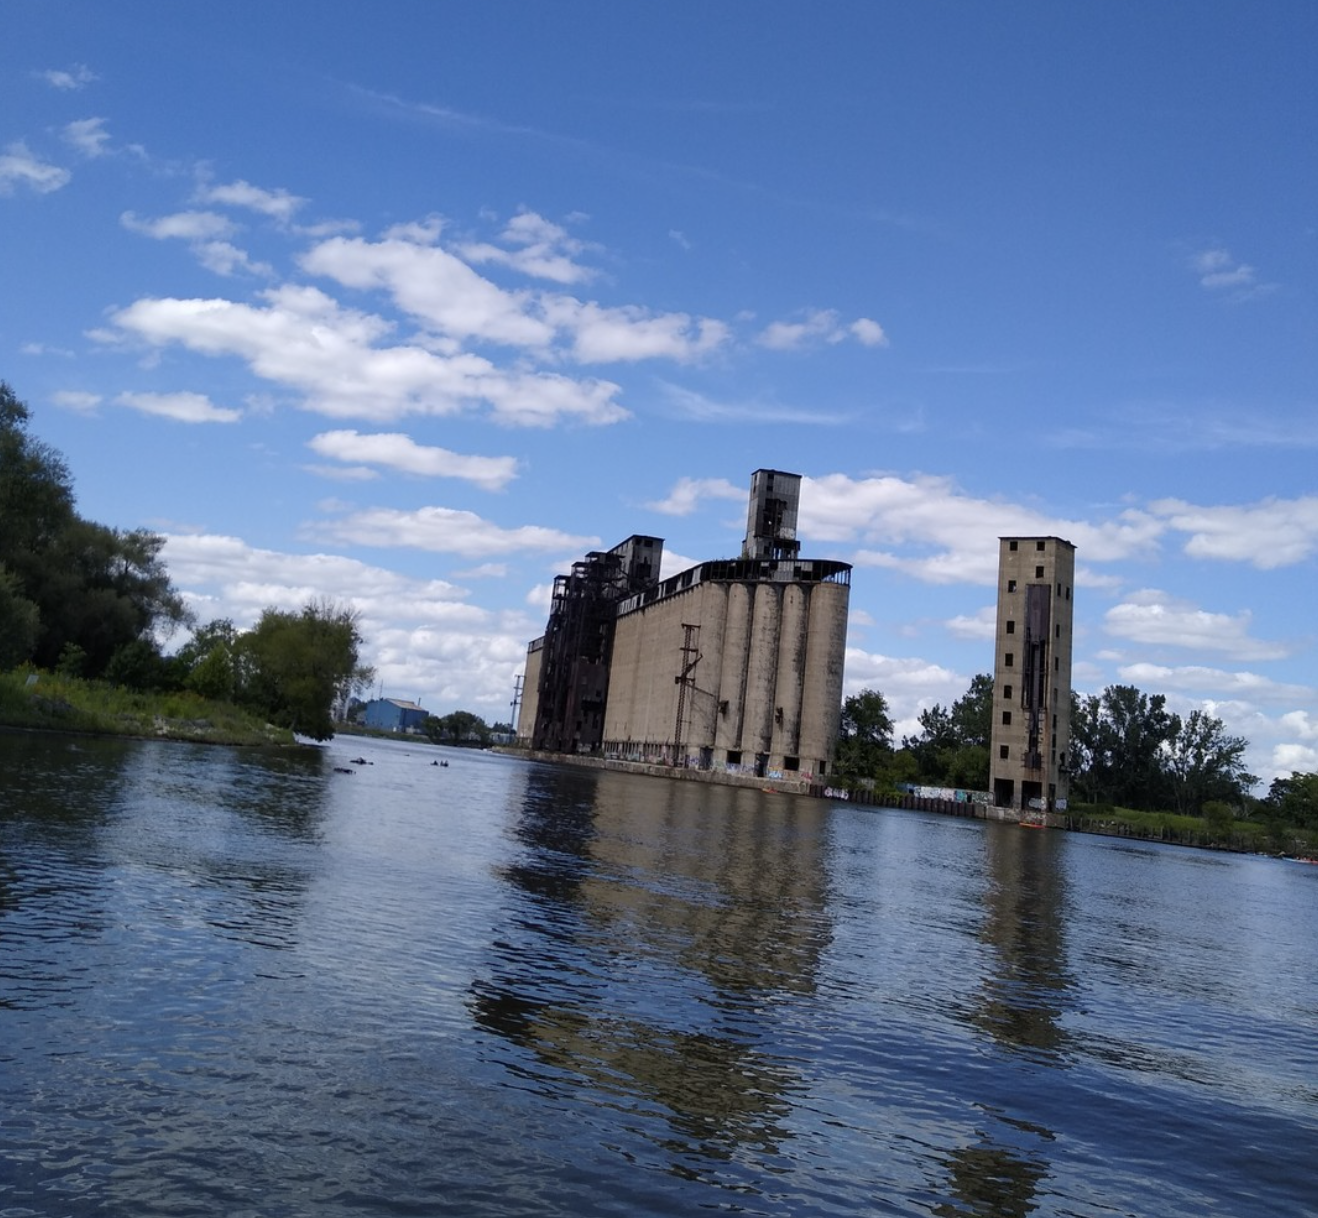 Buffalo River History Tours